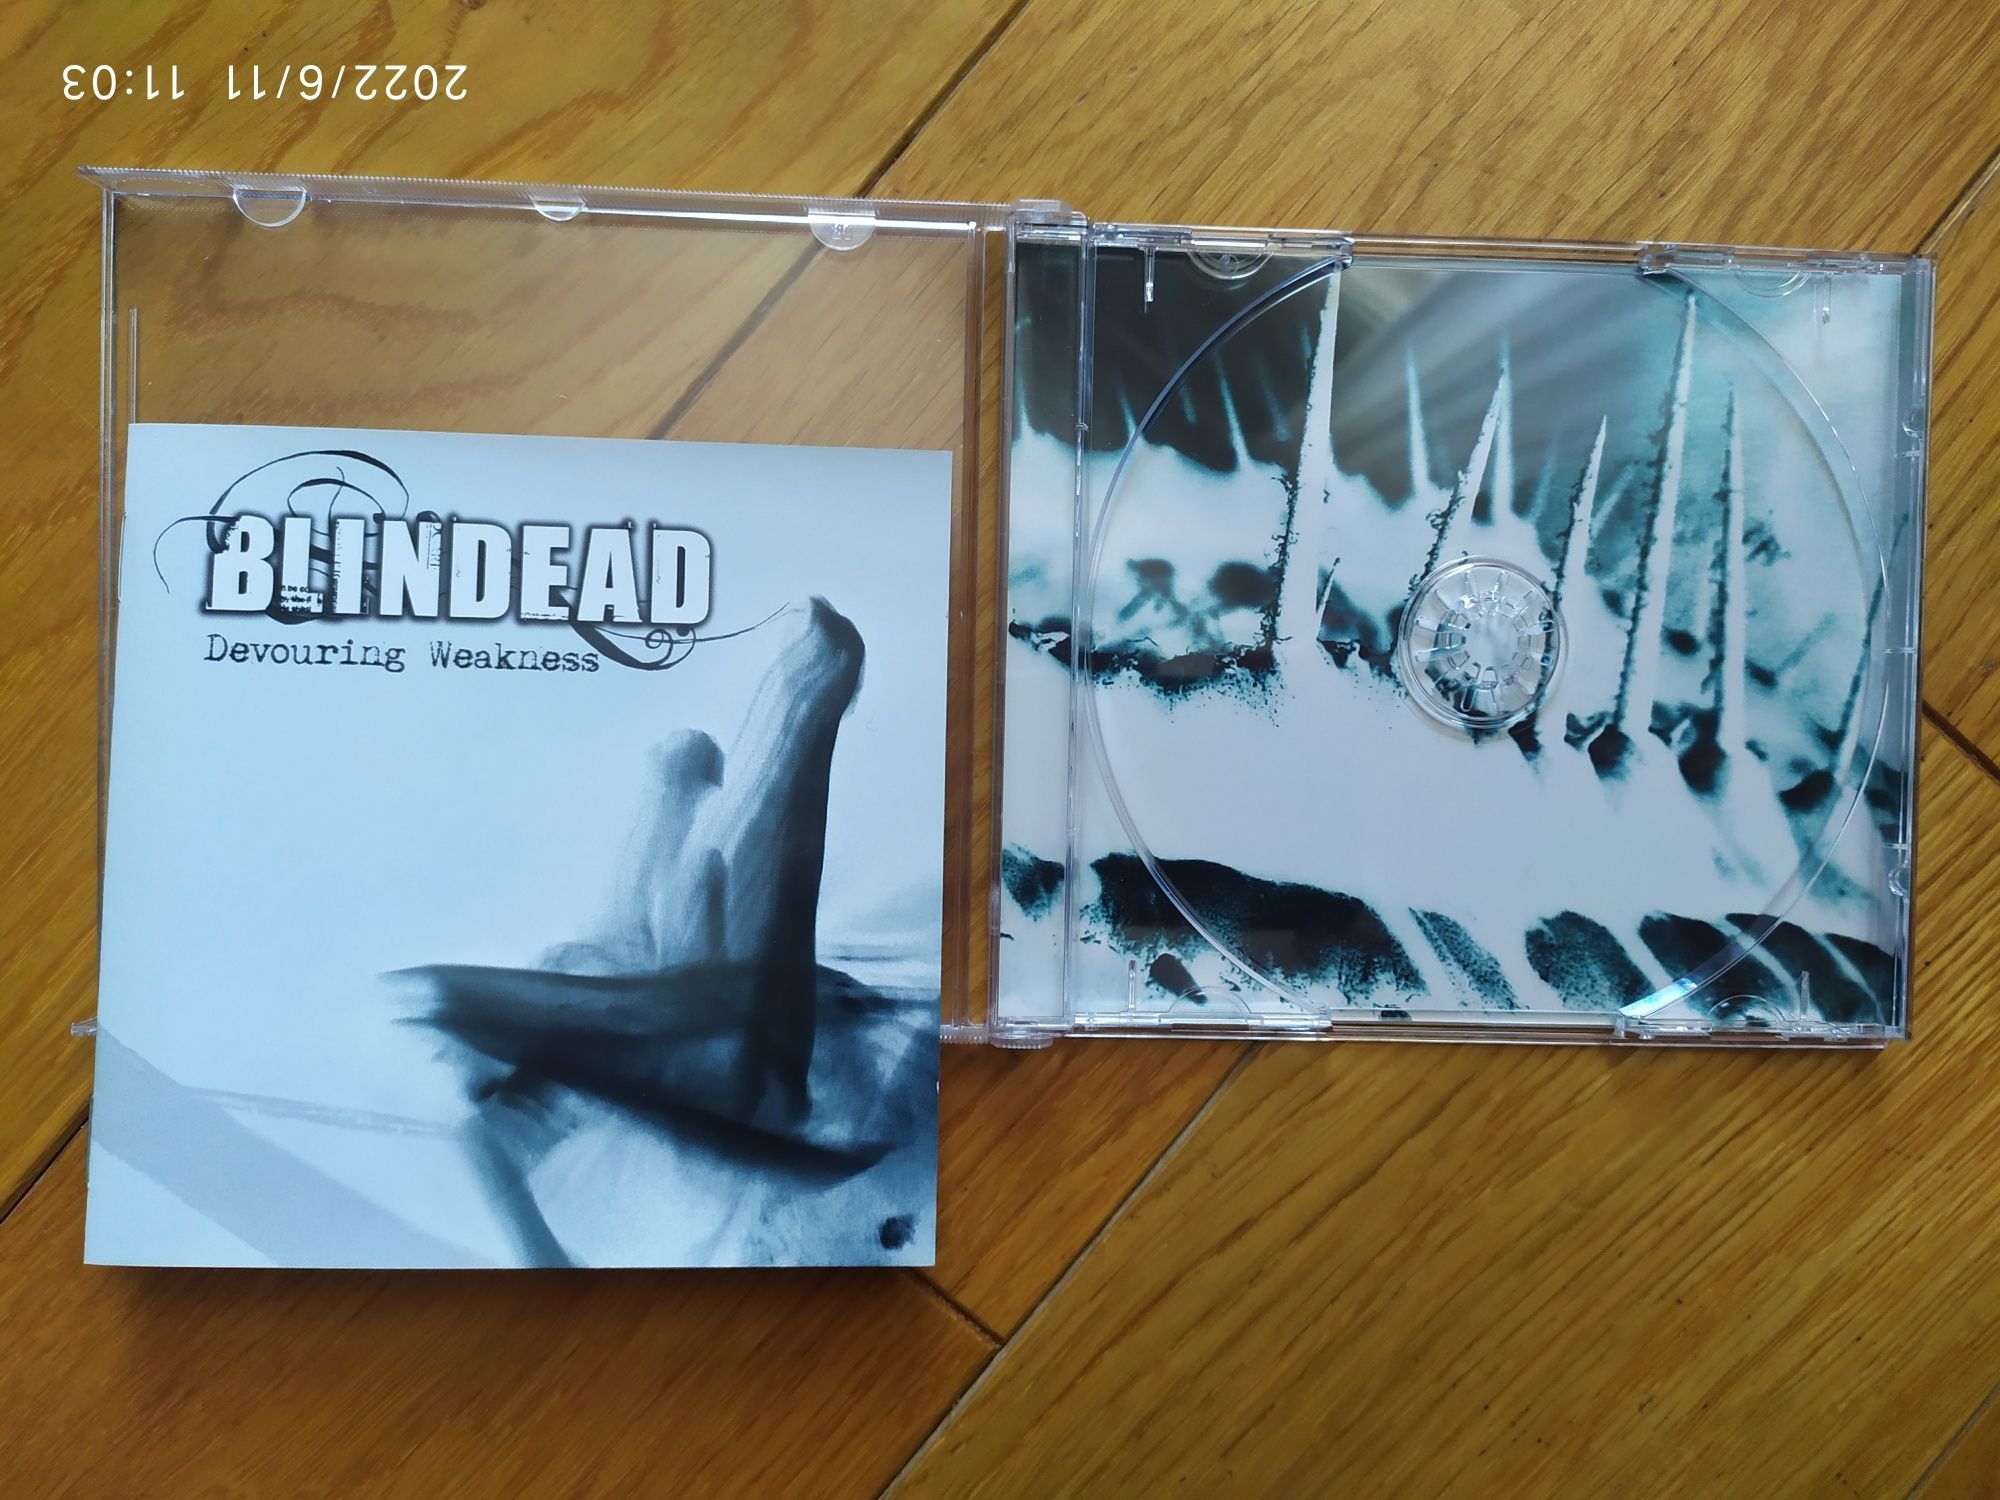 Blindead Devouring Weakness CD